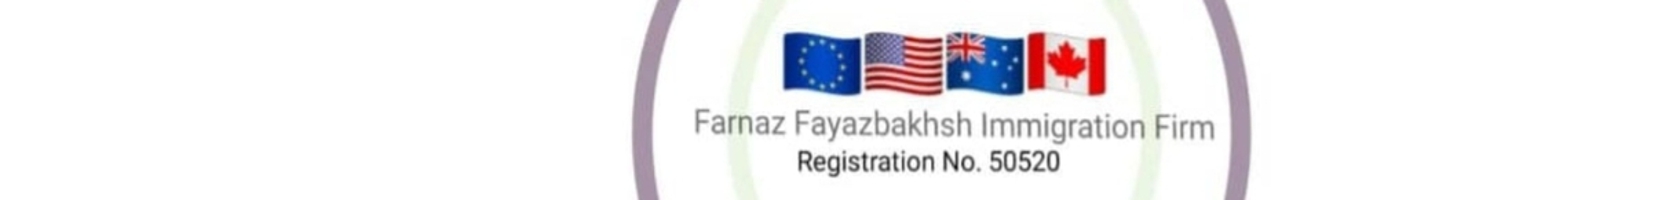  Farnazfayazbakhshaustralia